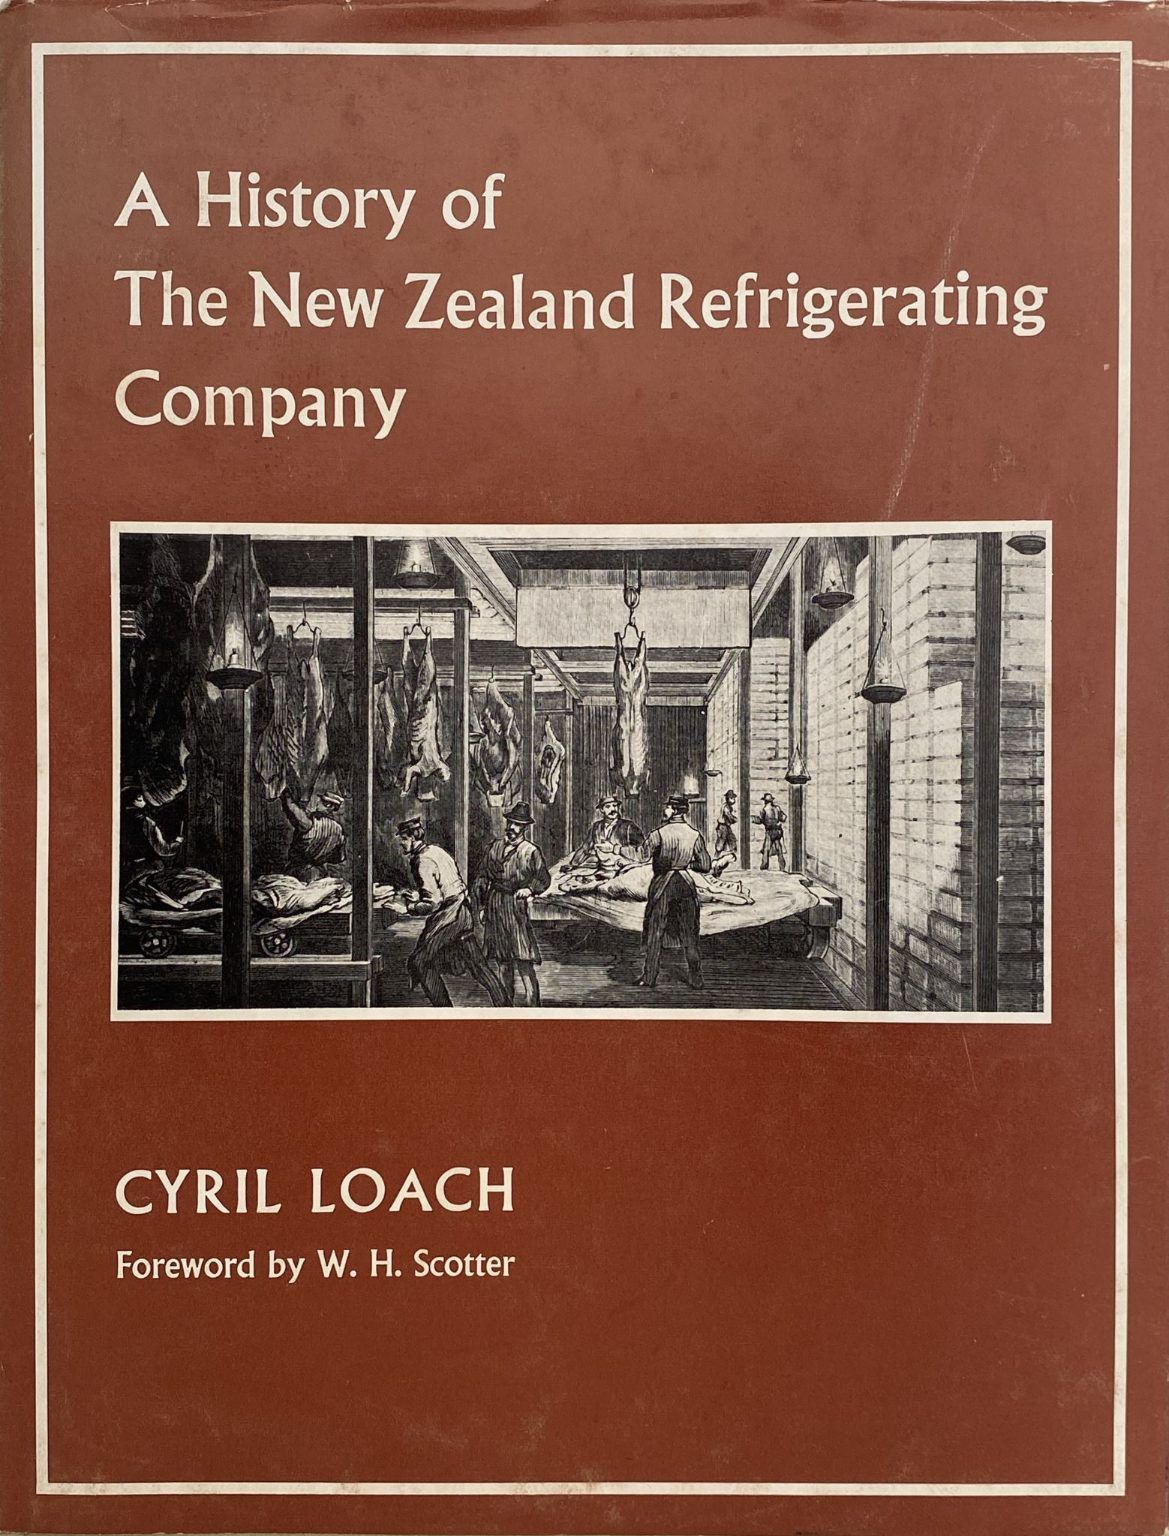 A HISTORY OF THE NEW ZEALAND REFRIGERATING COMPANY